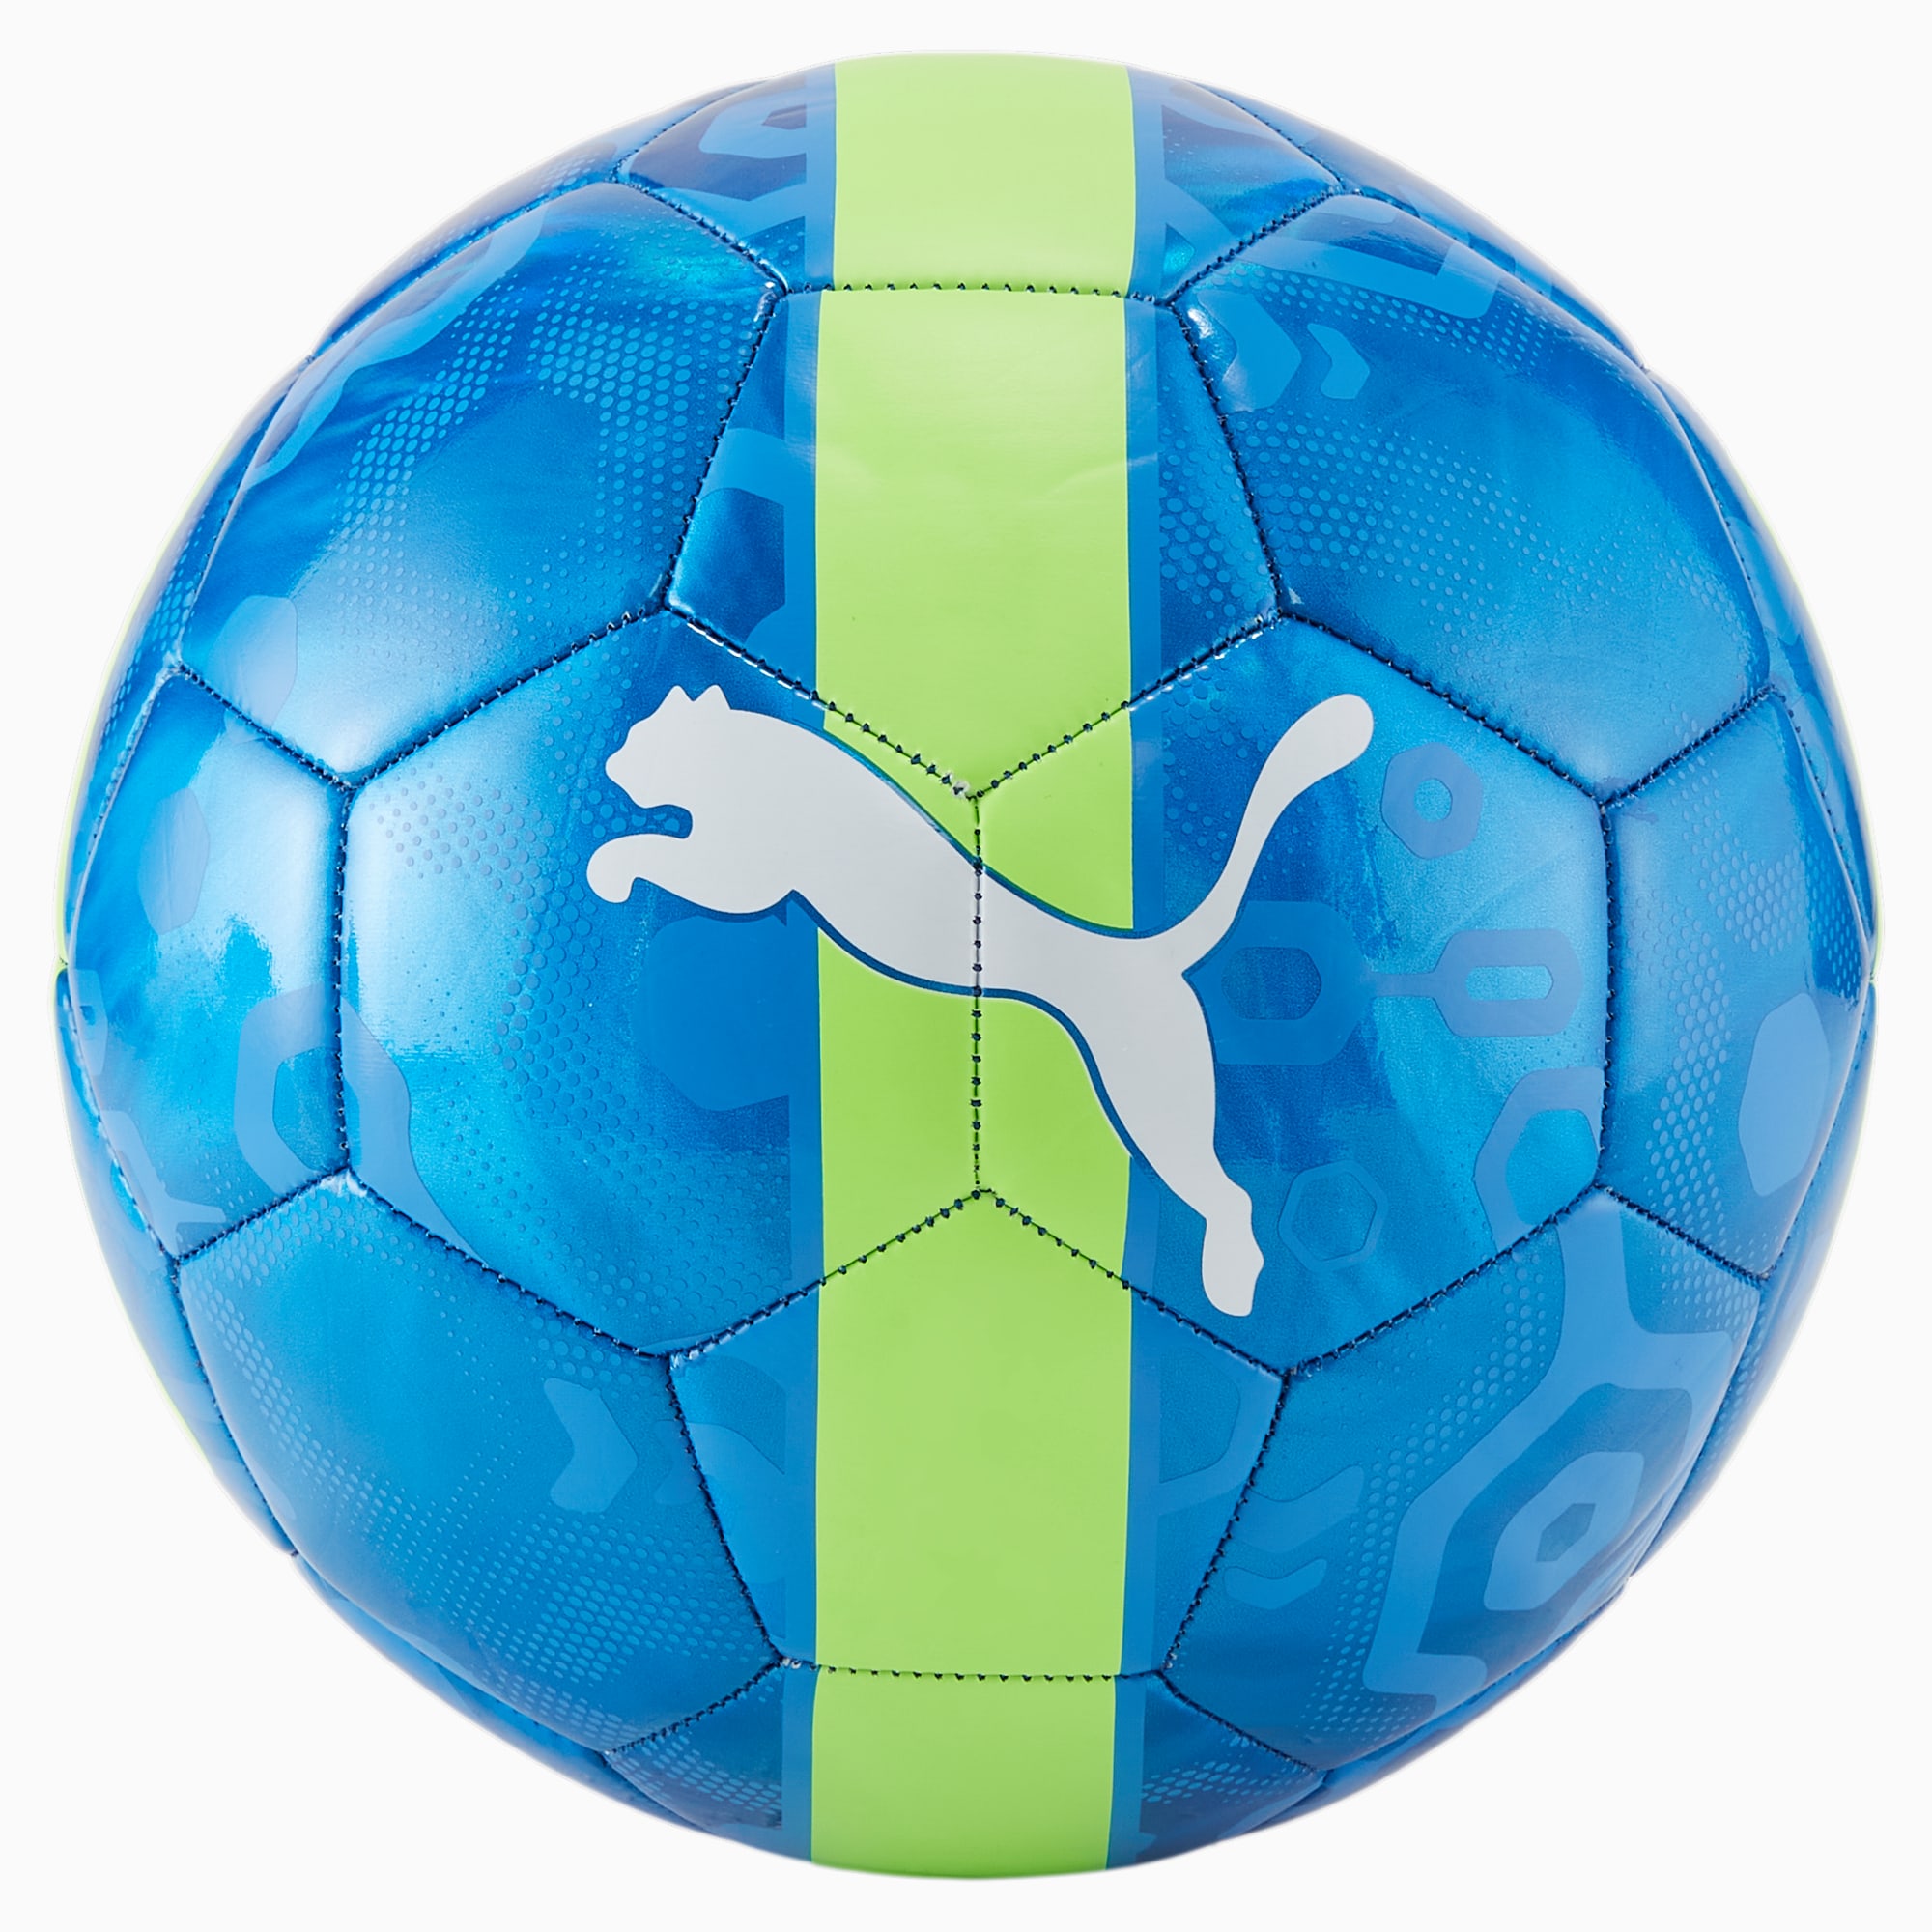 PUMA Cup Fußball, Blau/Grün, Größe: 5